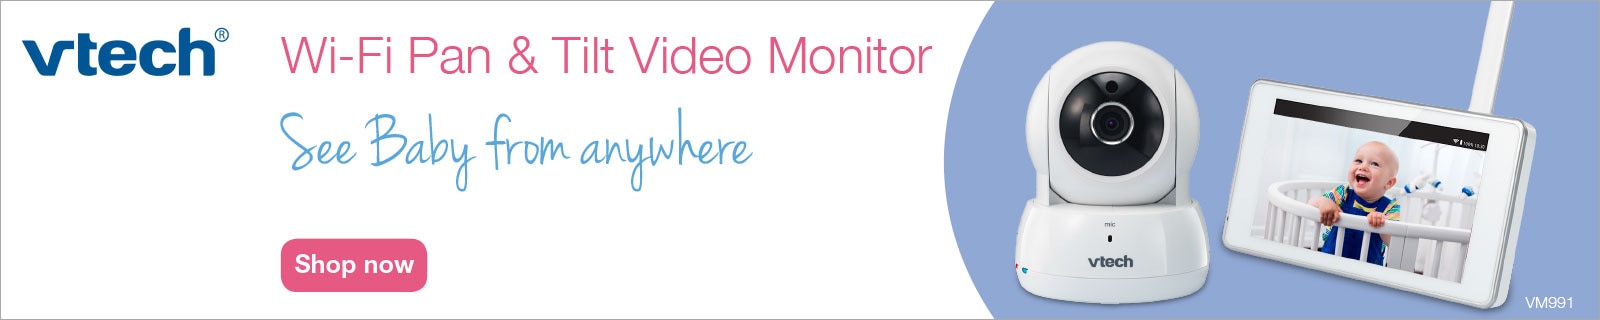 vtech pan and tilt monitor